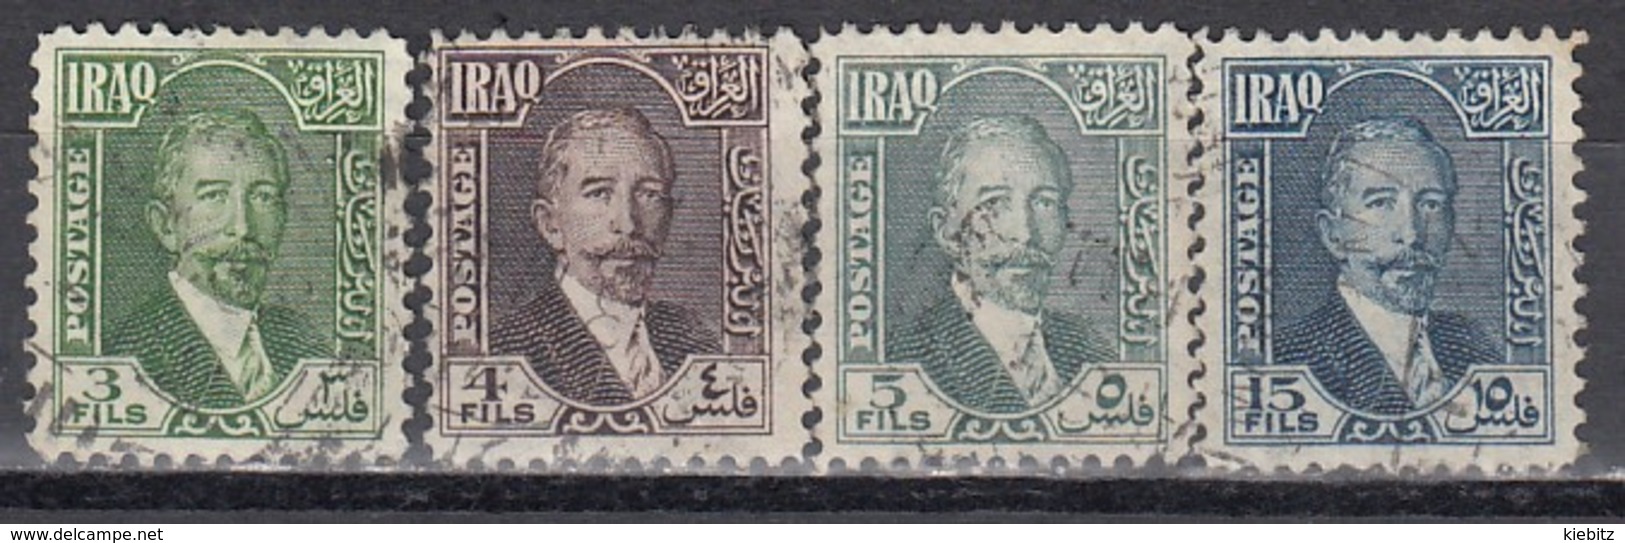 IRAK 1932 - MiNr: 62 - 78 Lot 4x   Used - Irak